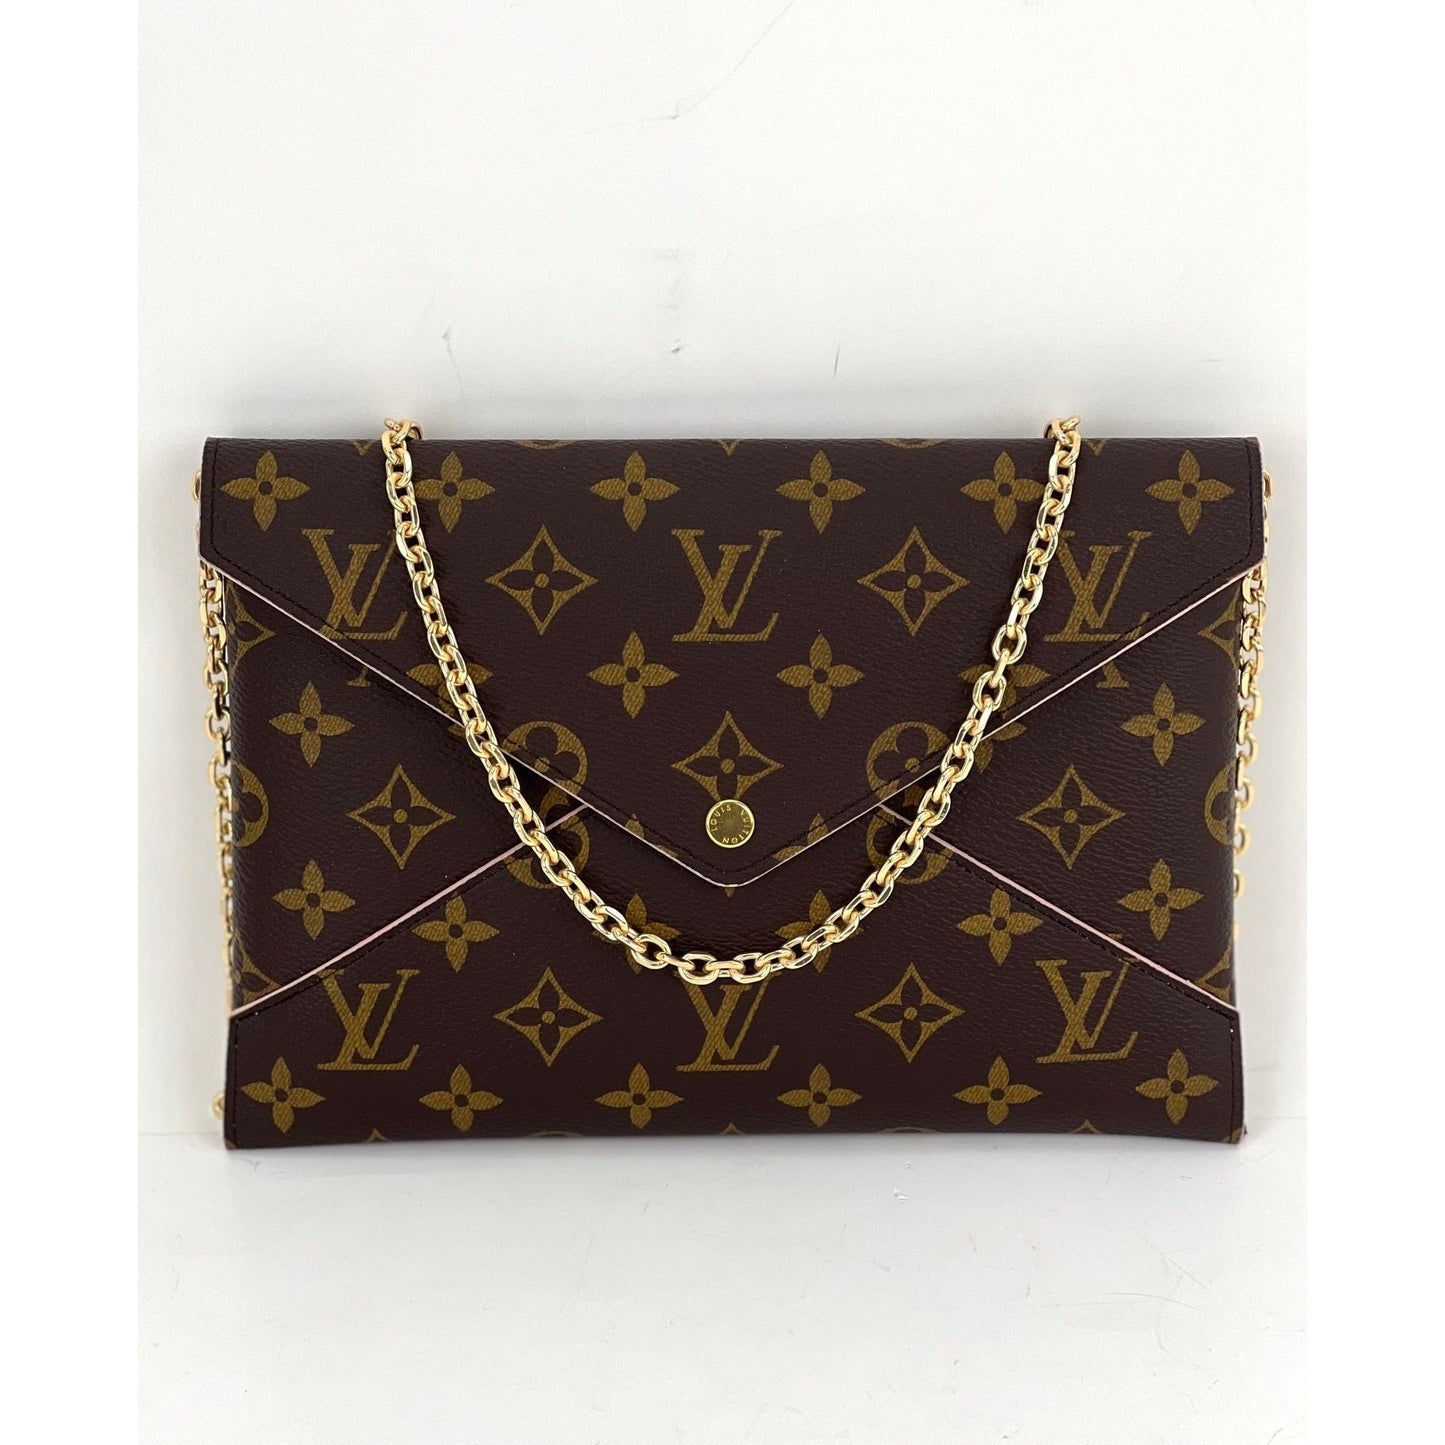 Louis Vuitton Large Kirigami Pochette Crossbody Clutch Bag